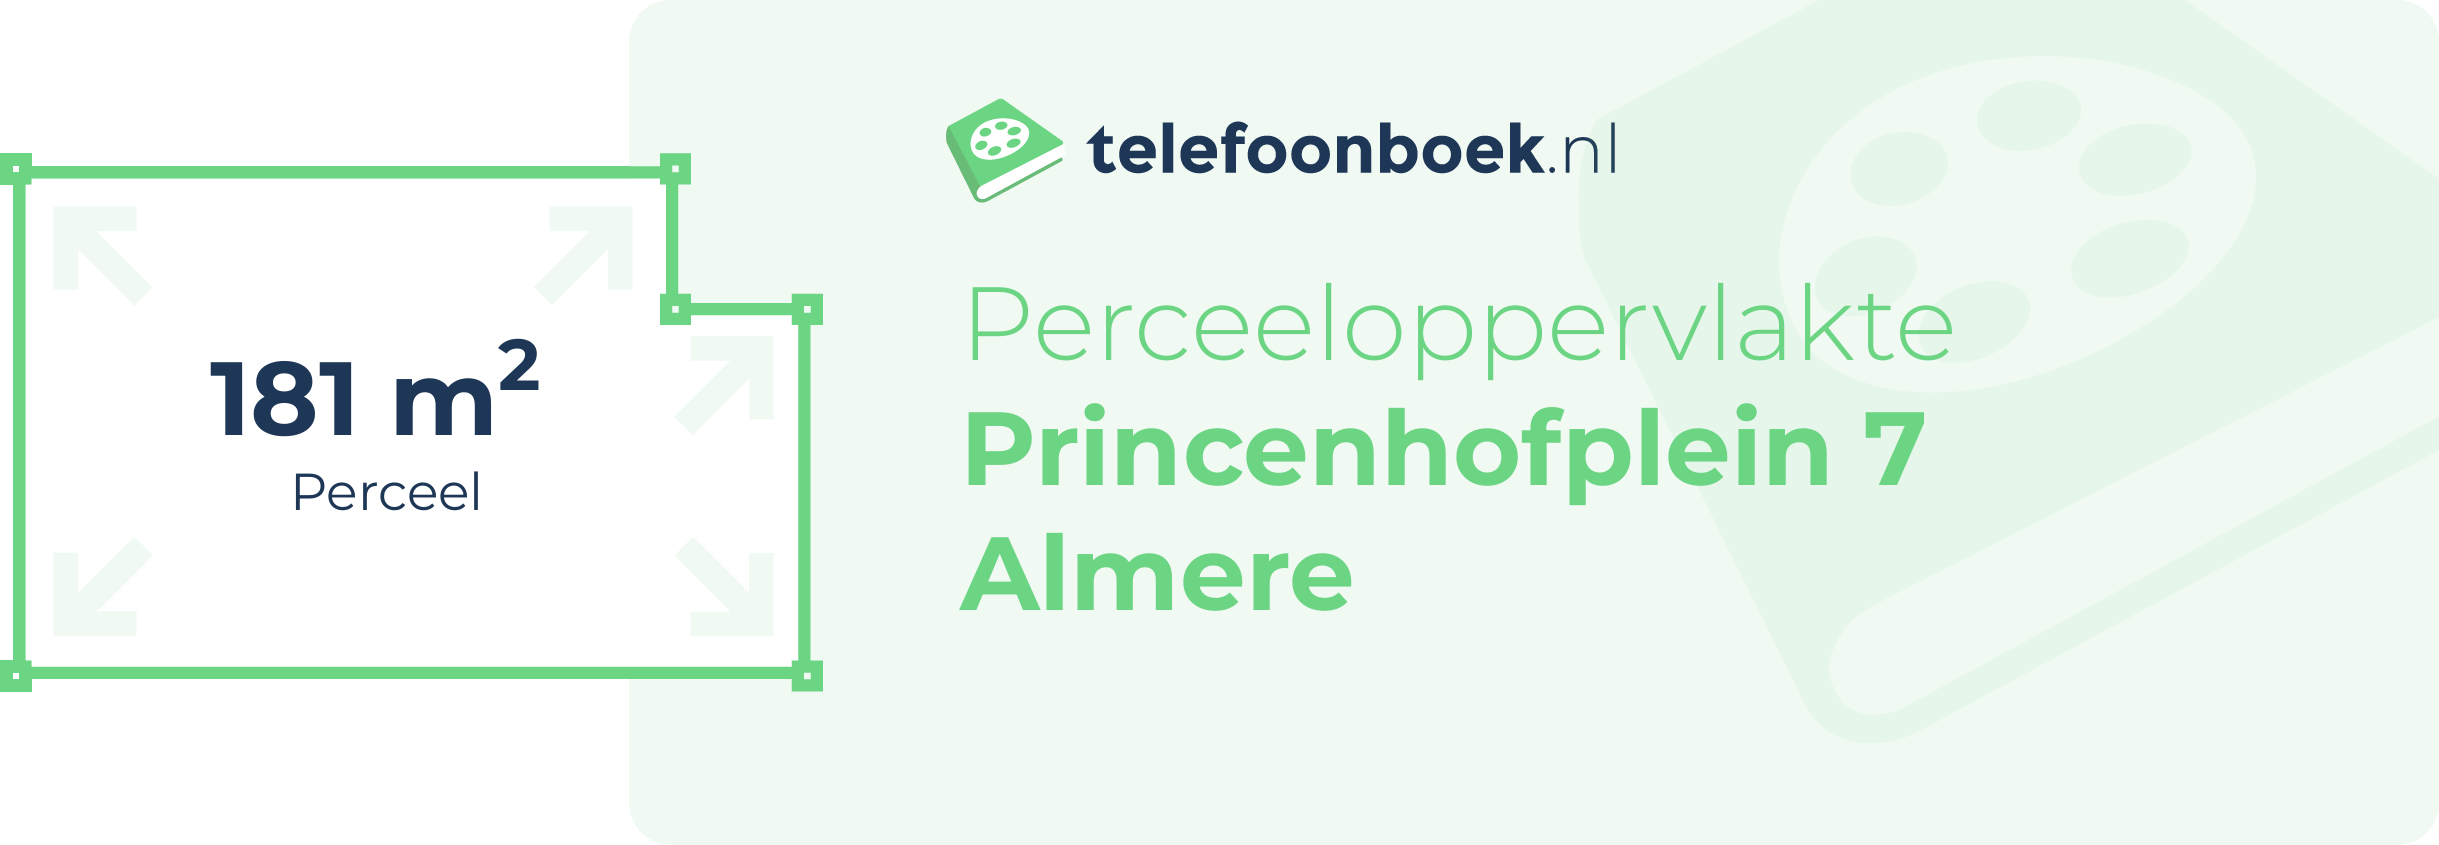 Perceeloppervlakte Princenhofplein 7 Almere